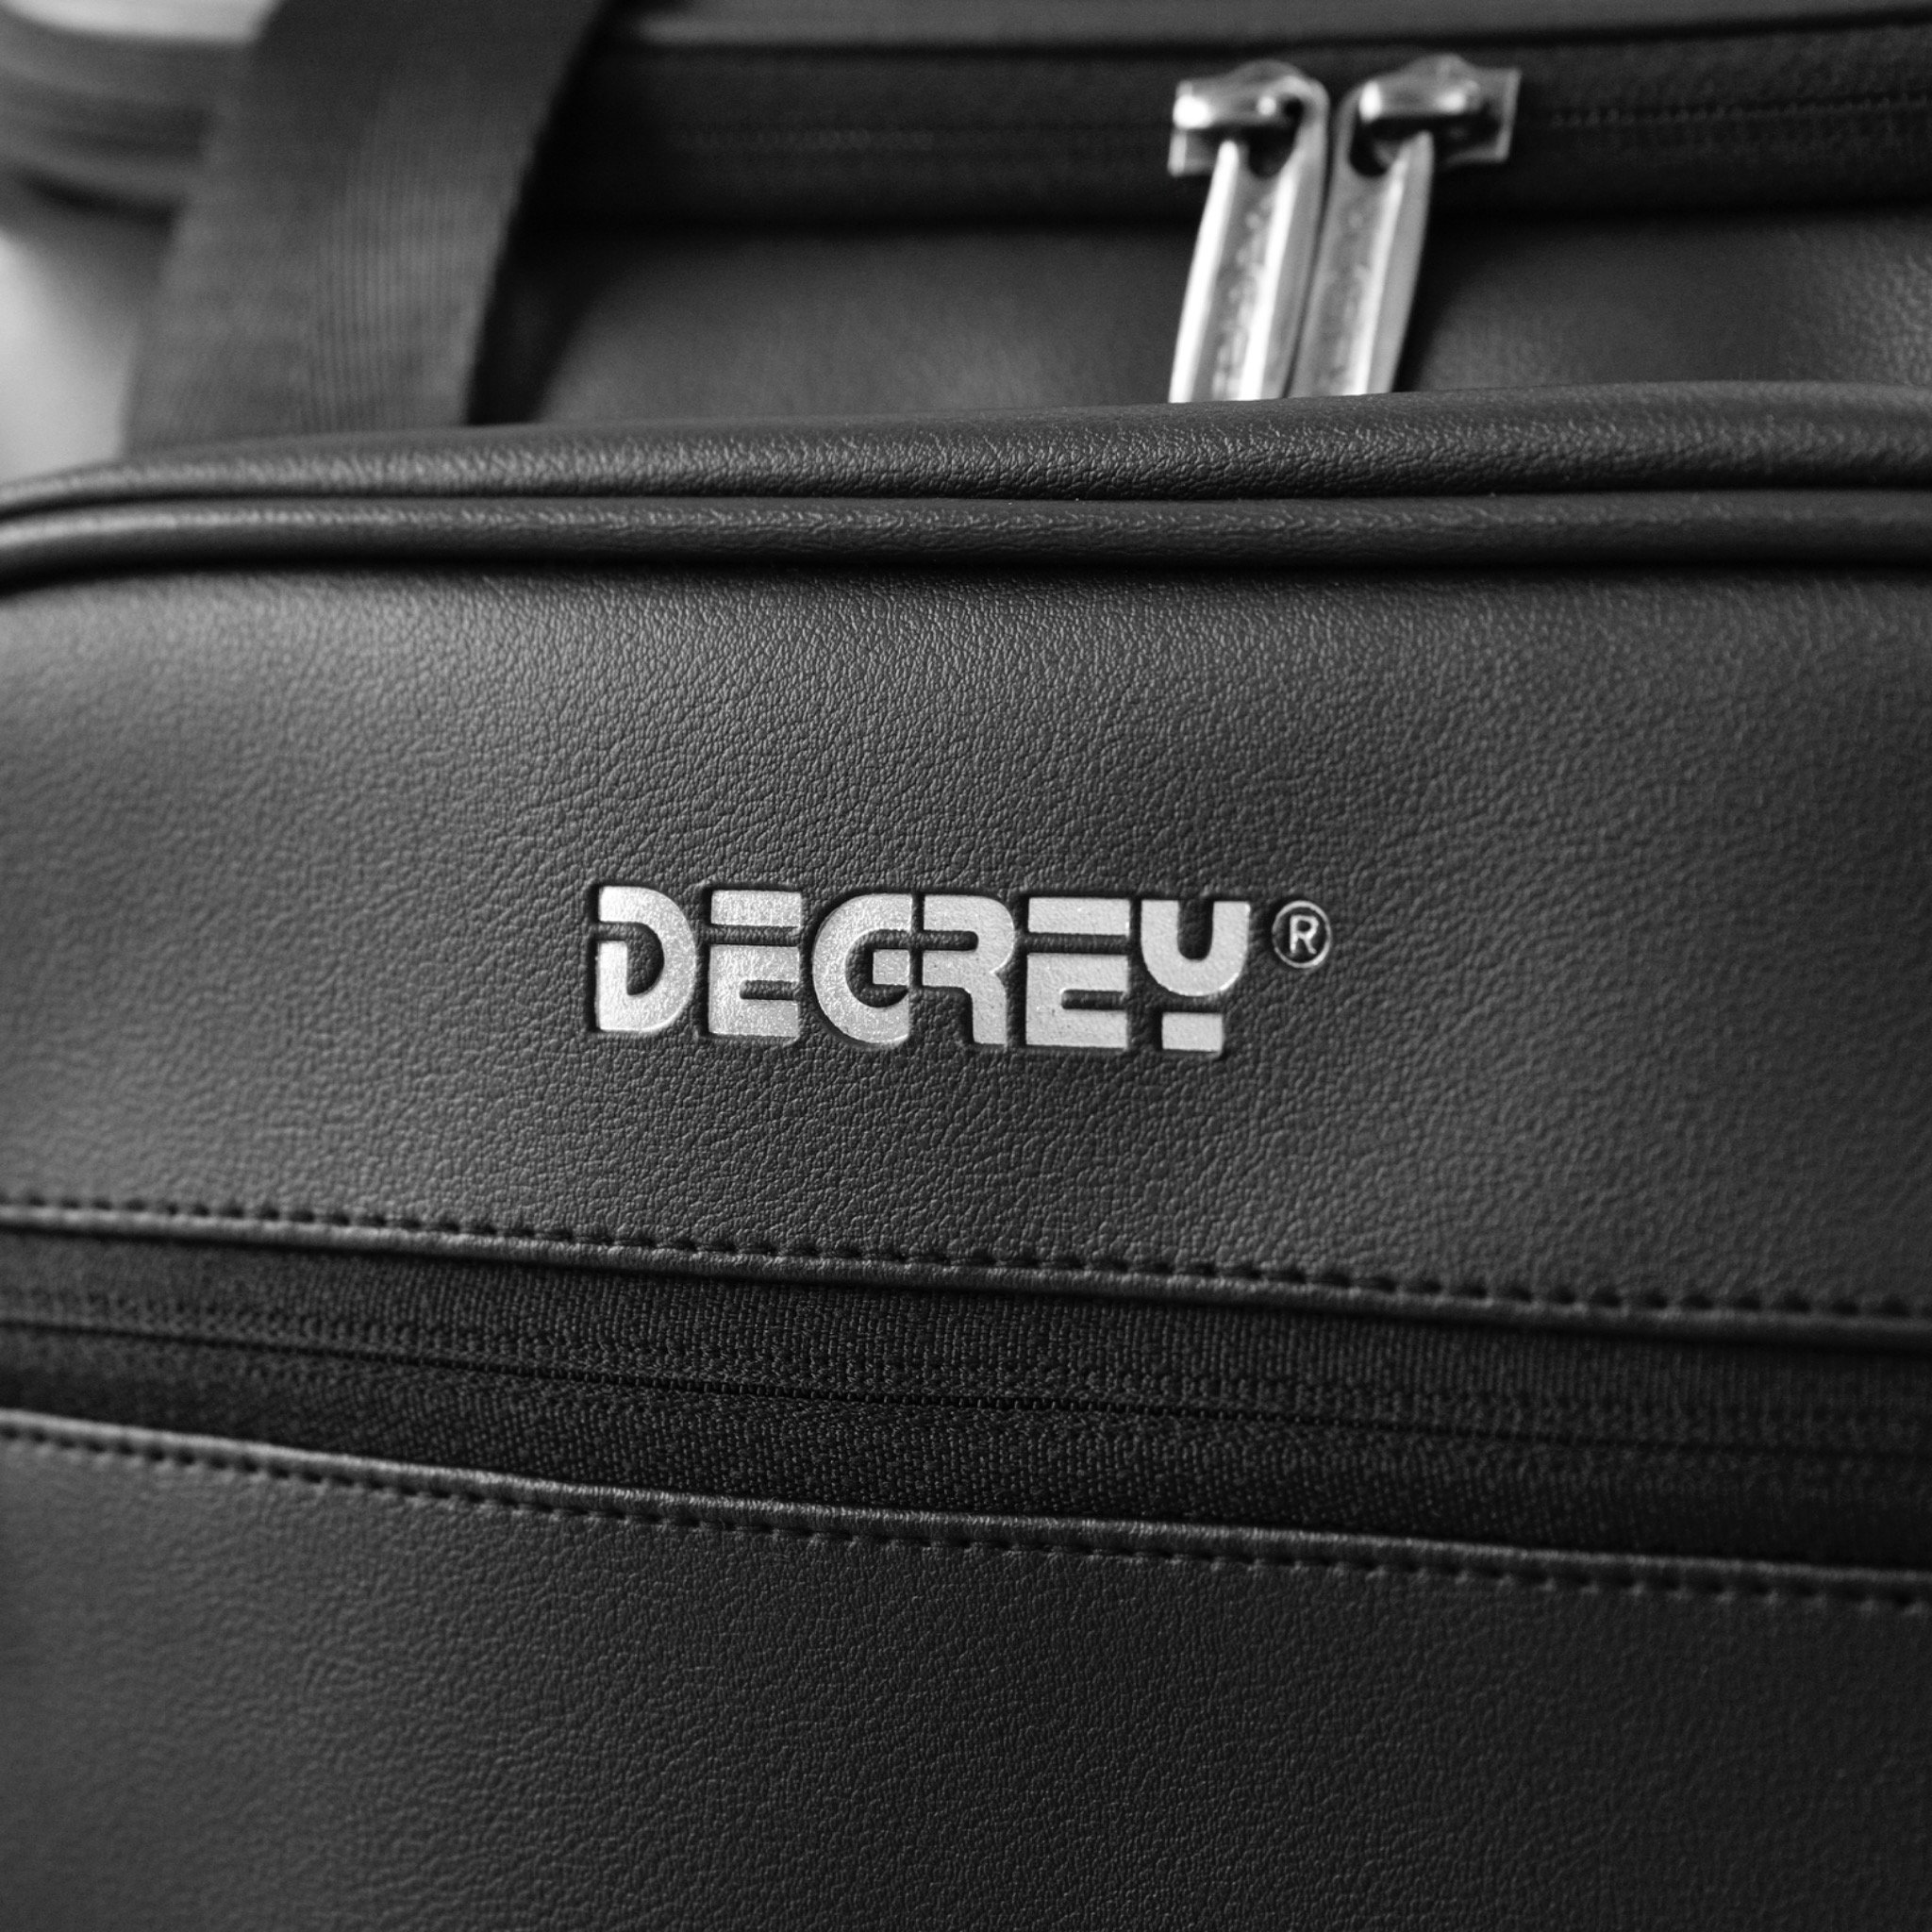  Túi Da Degrey Travel Leather Bag - TVB 